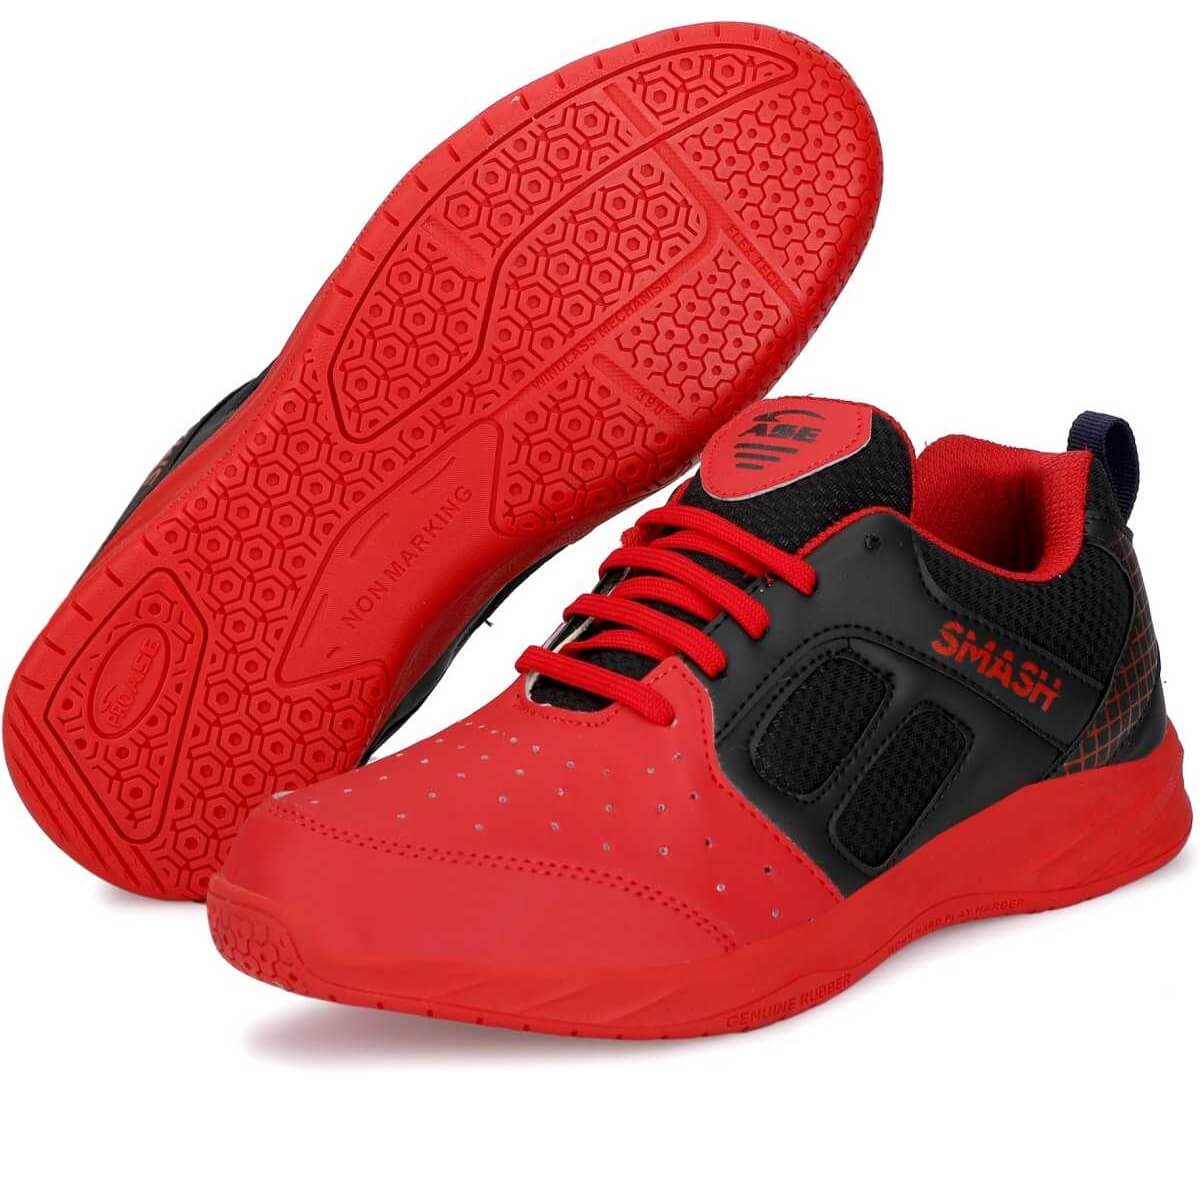 Proase Smash Badminton Shoes (Red/Black) – Sports Wing | Shop on